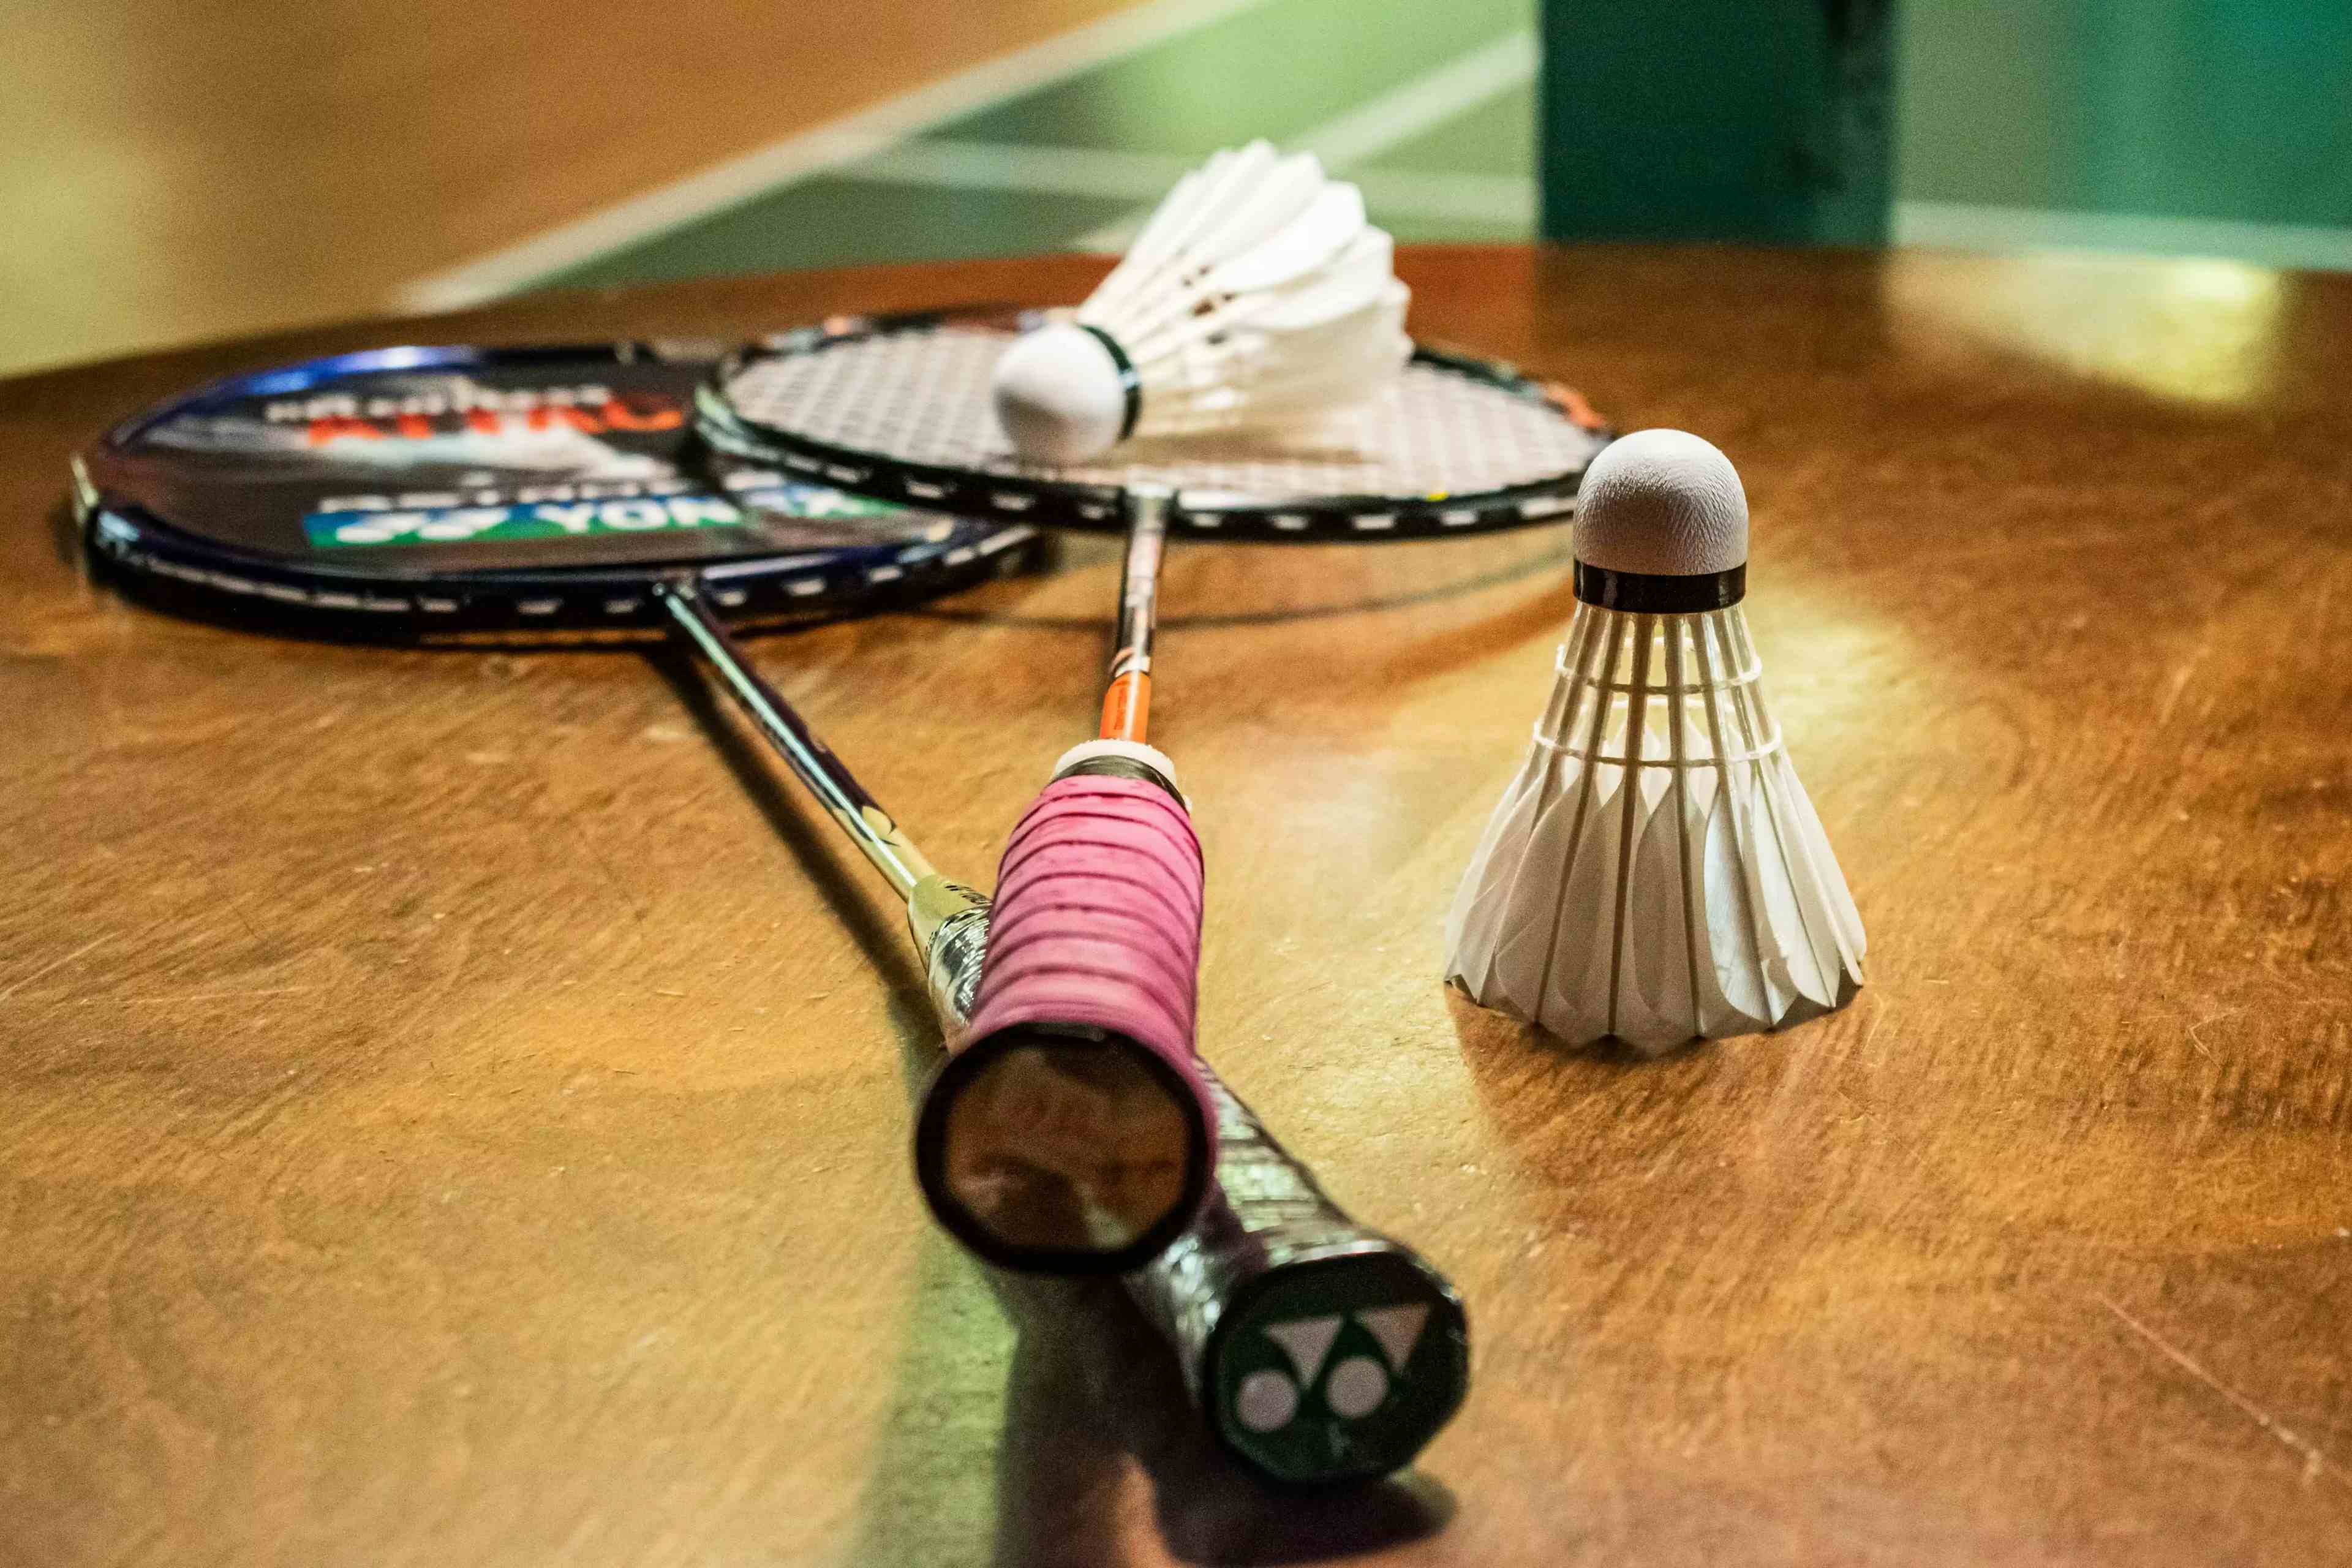 badminton-racket